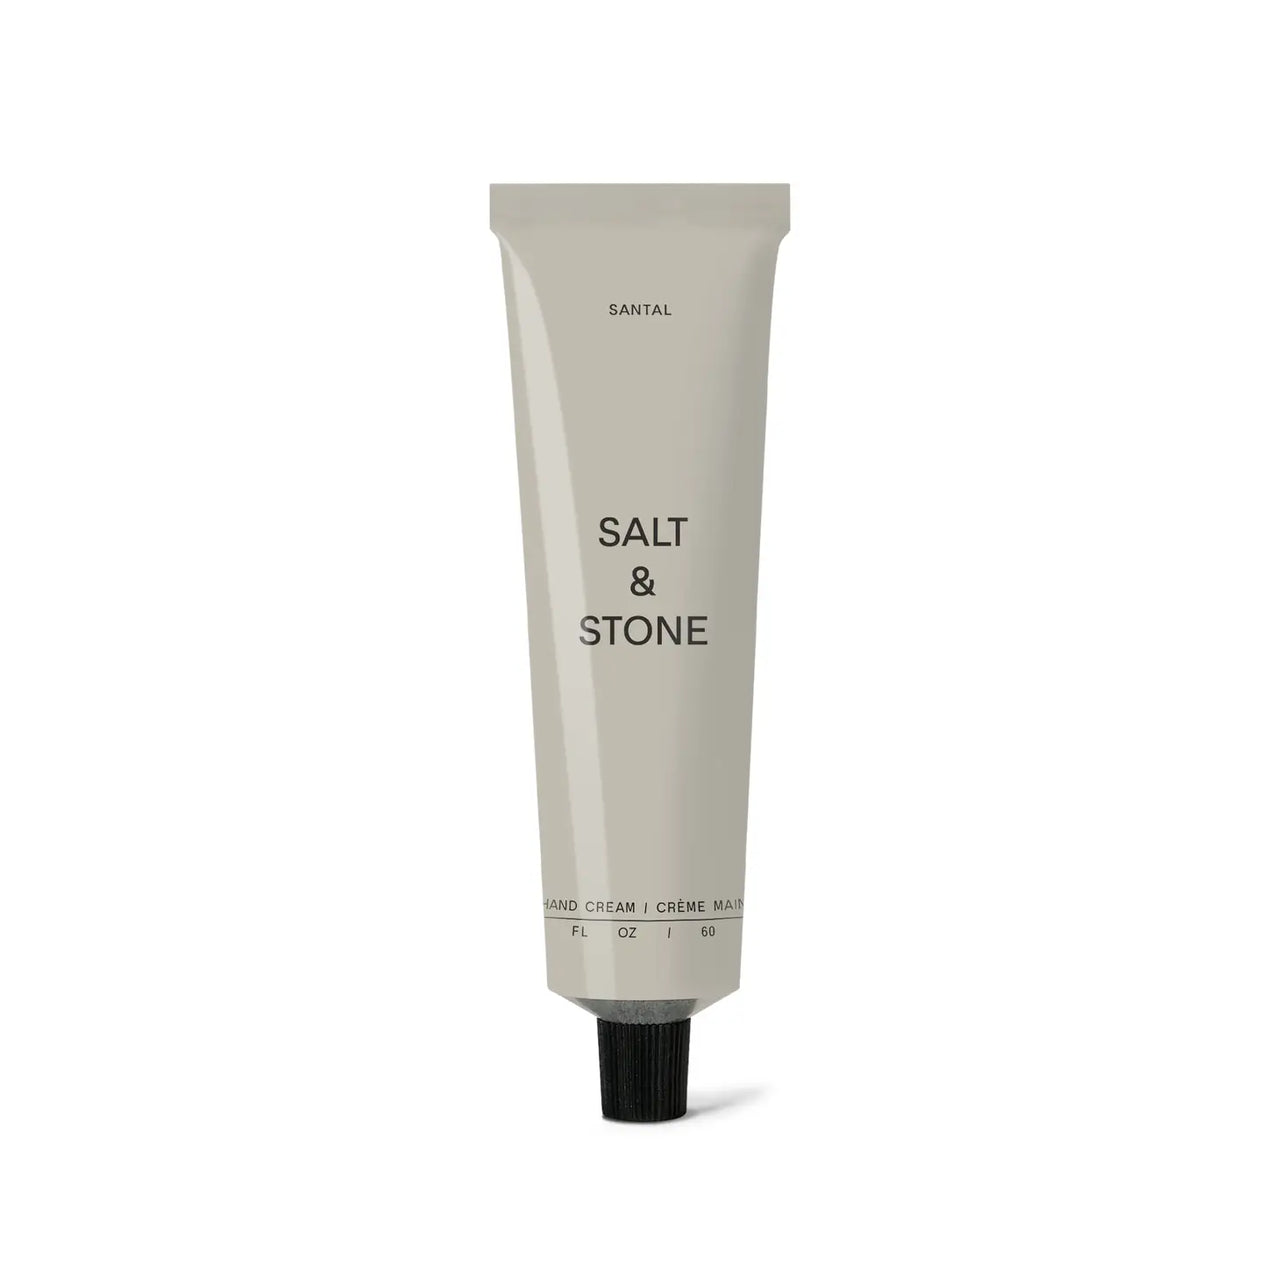 SALT AND STONE HAND CREAM- SANTAL